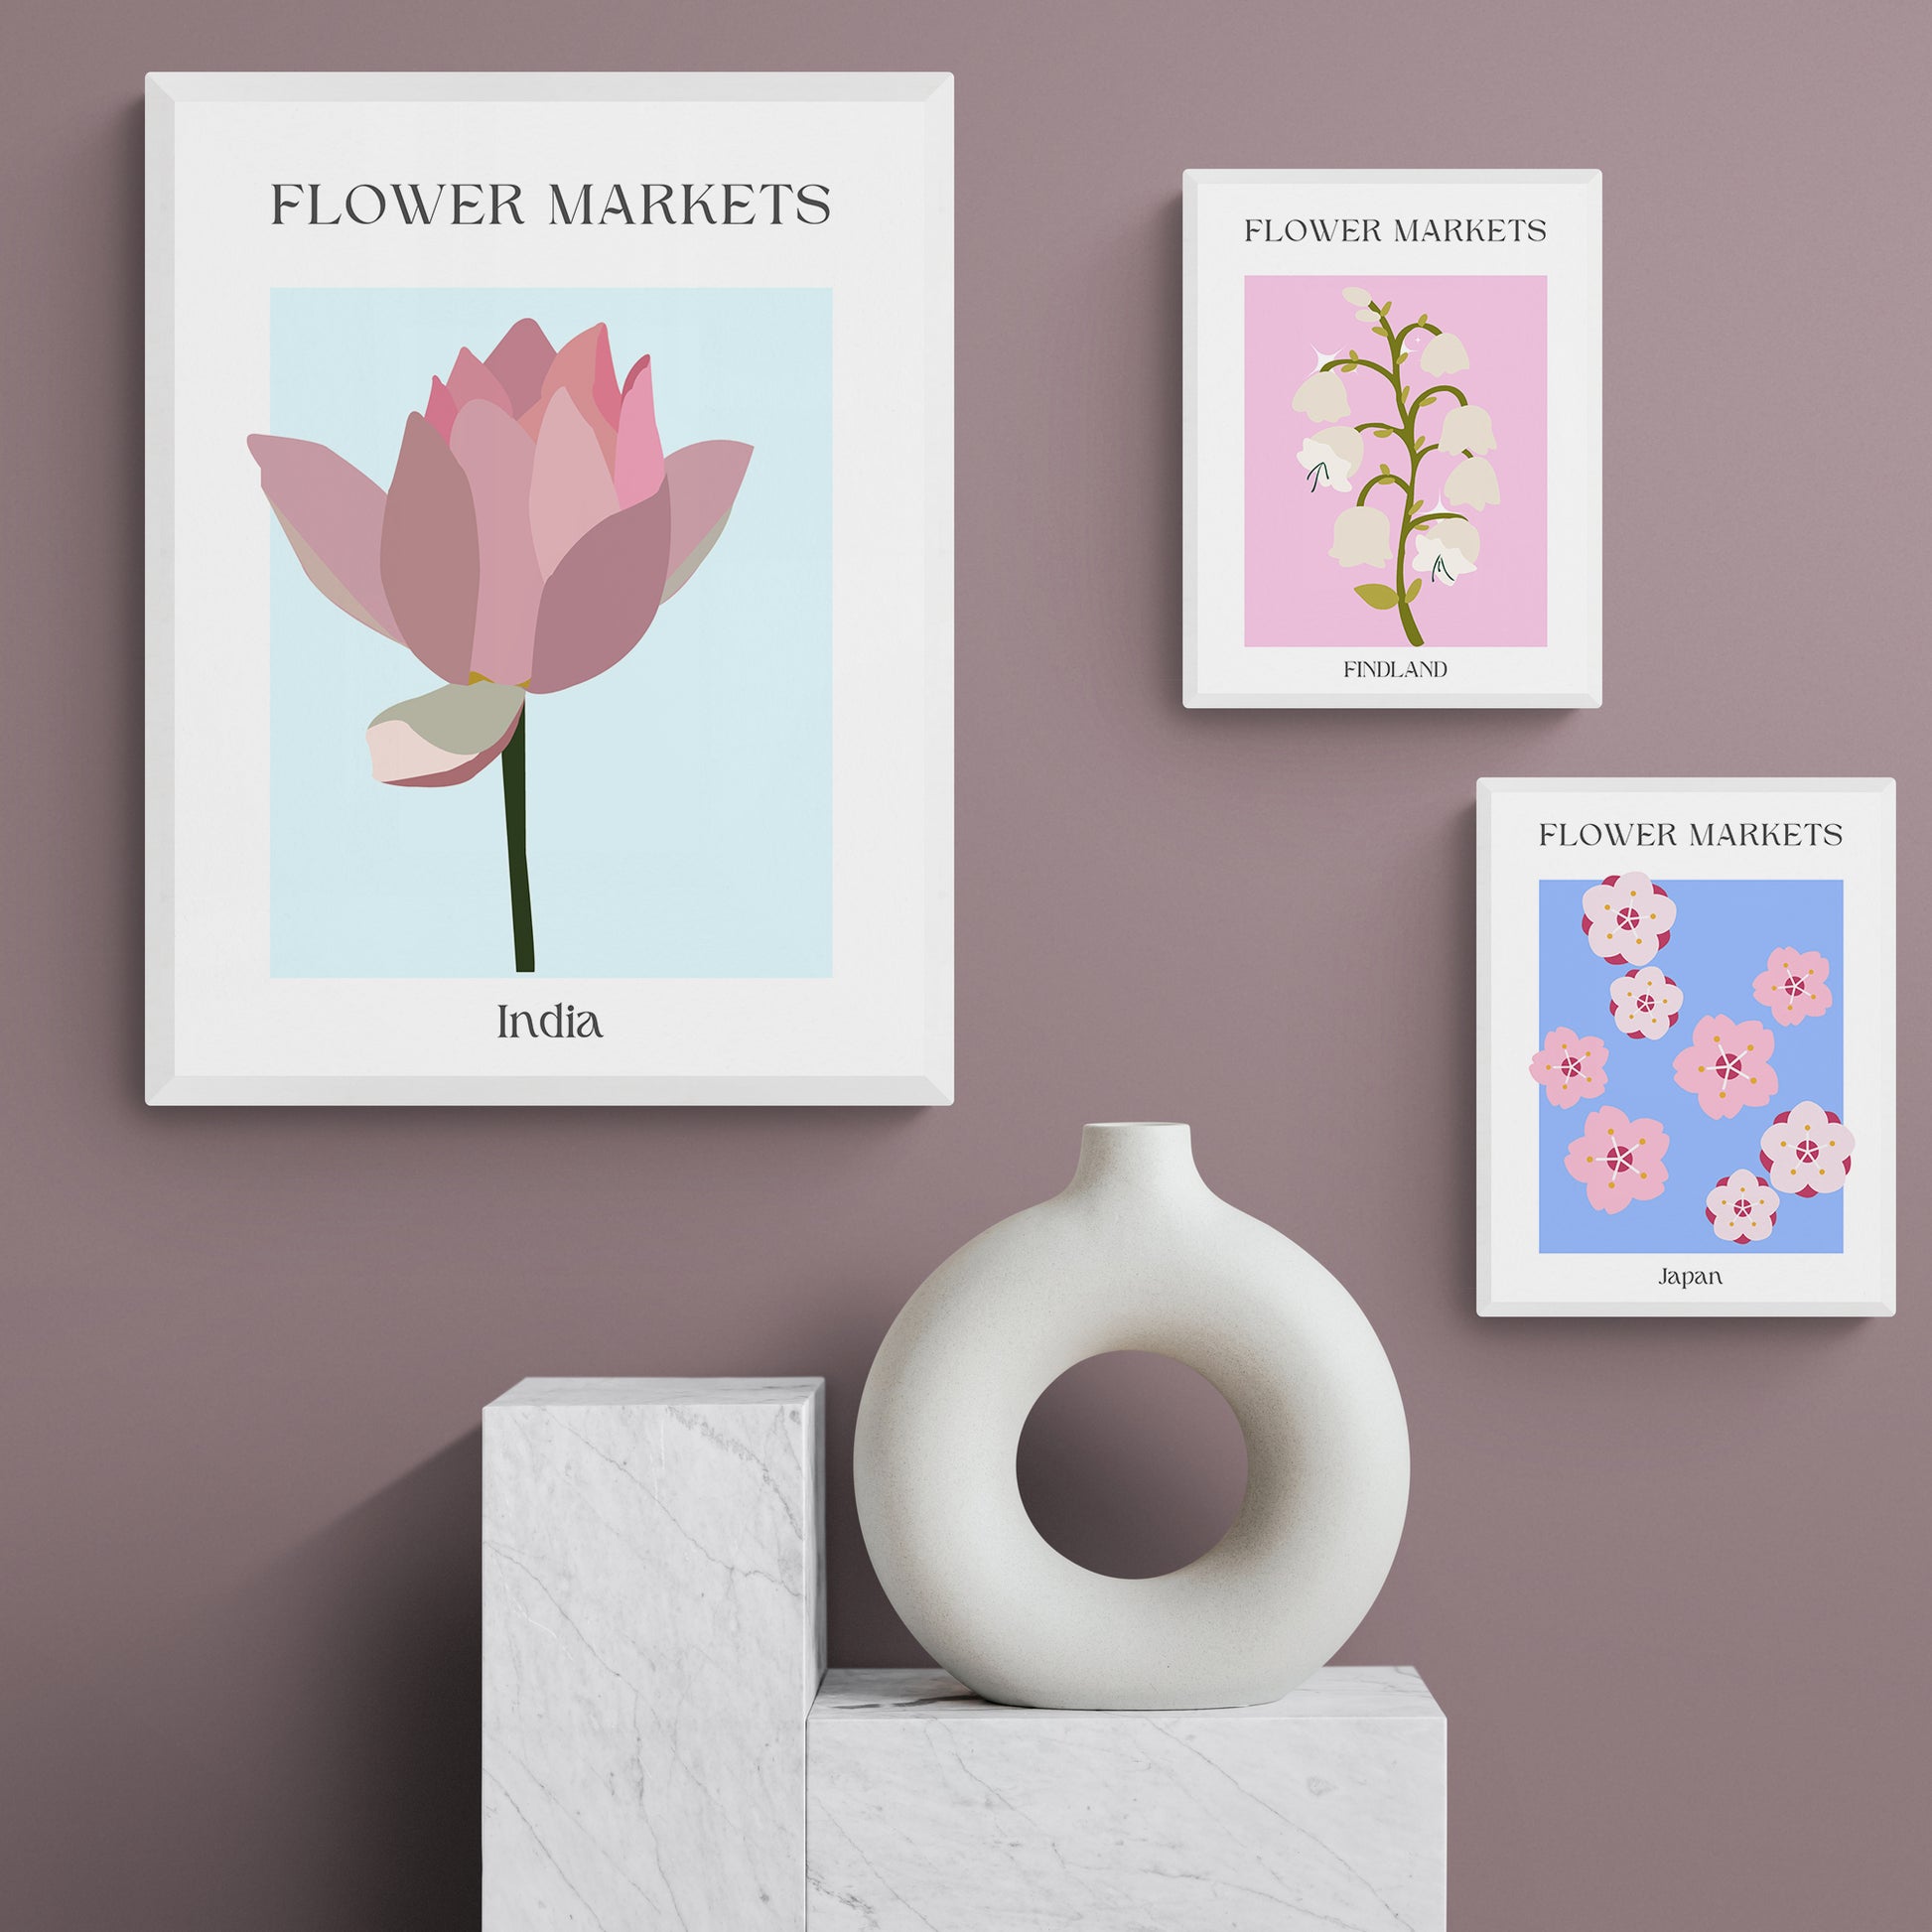 Japan 2 Flowers Market Print - 98types